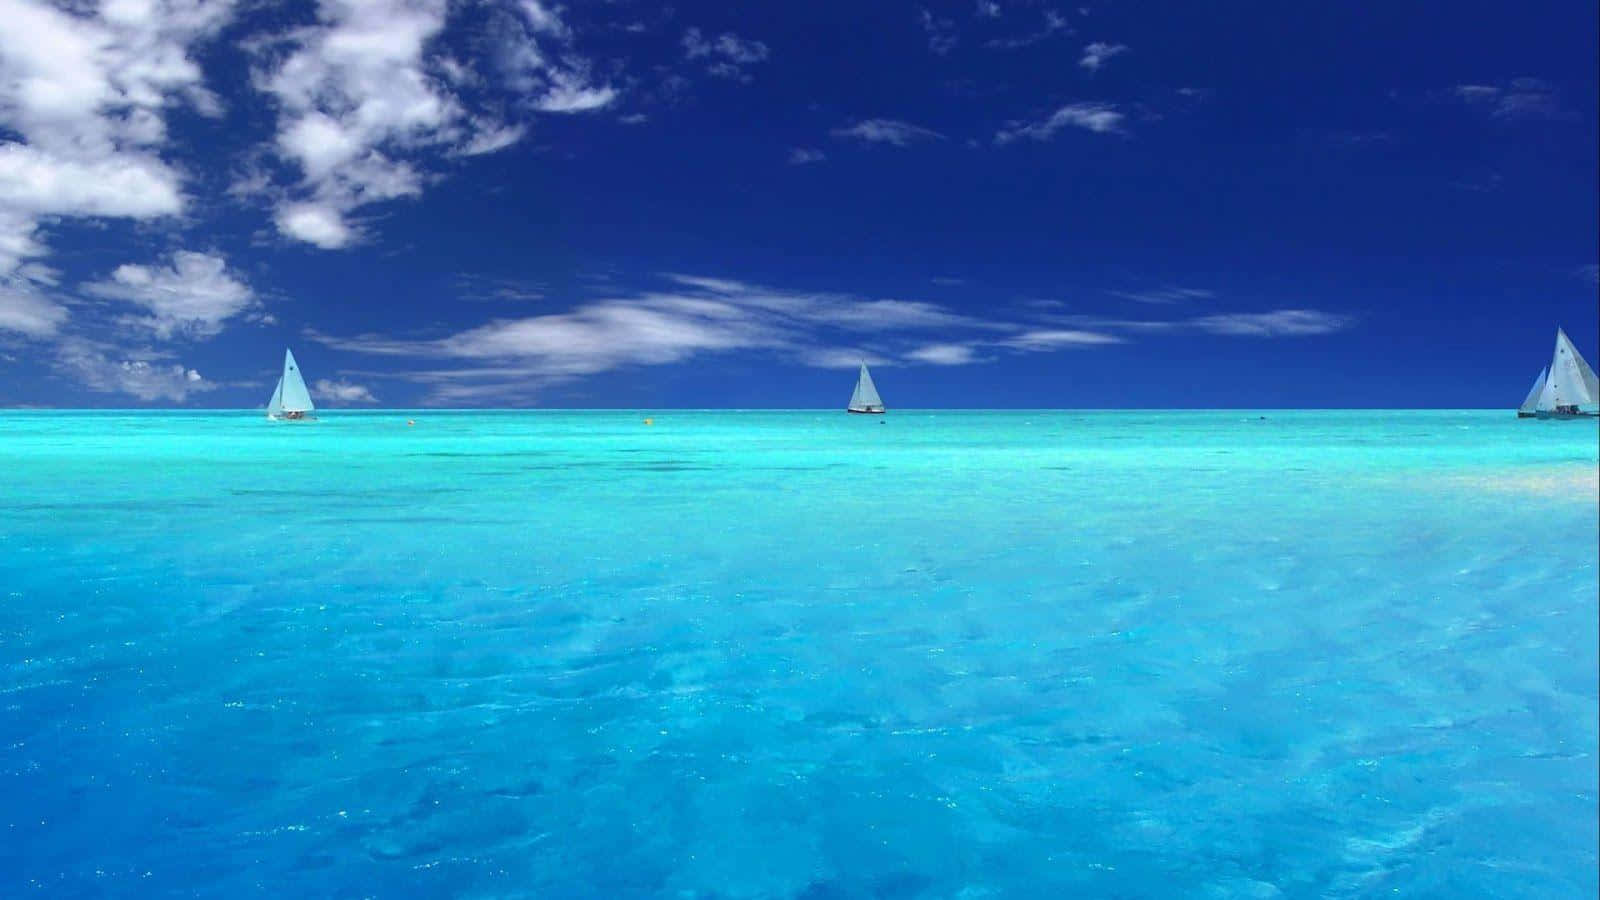 Enjoy the beauty of a captivating ocean blue